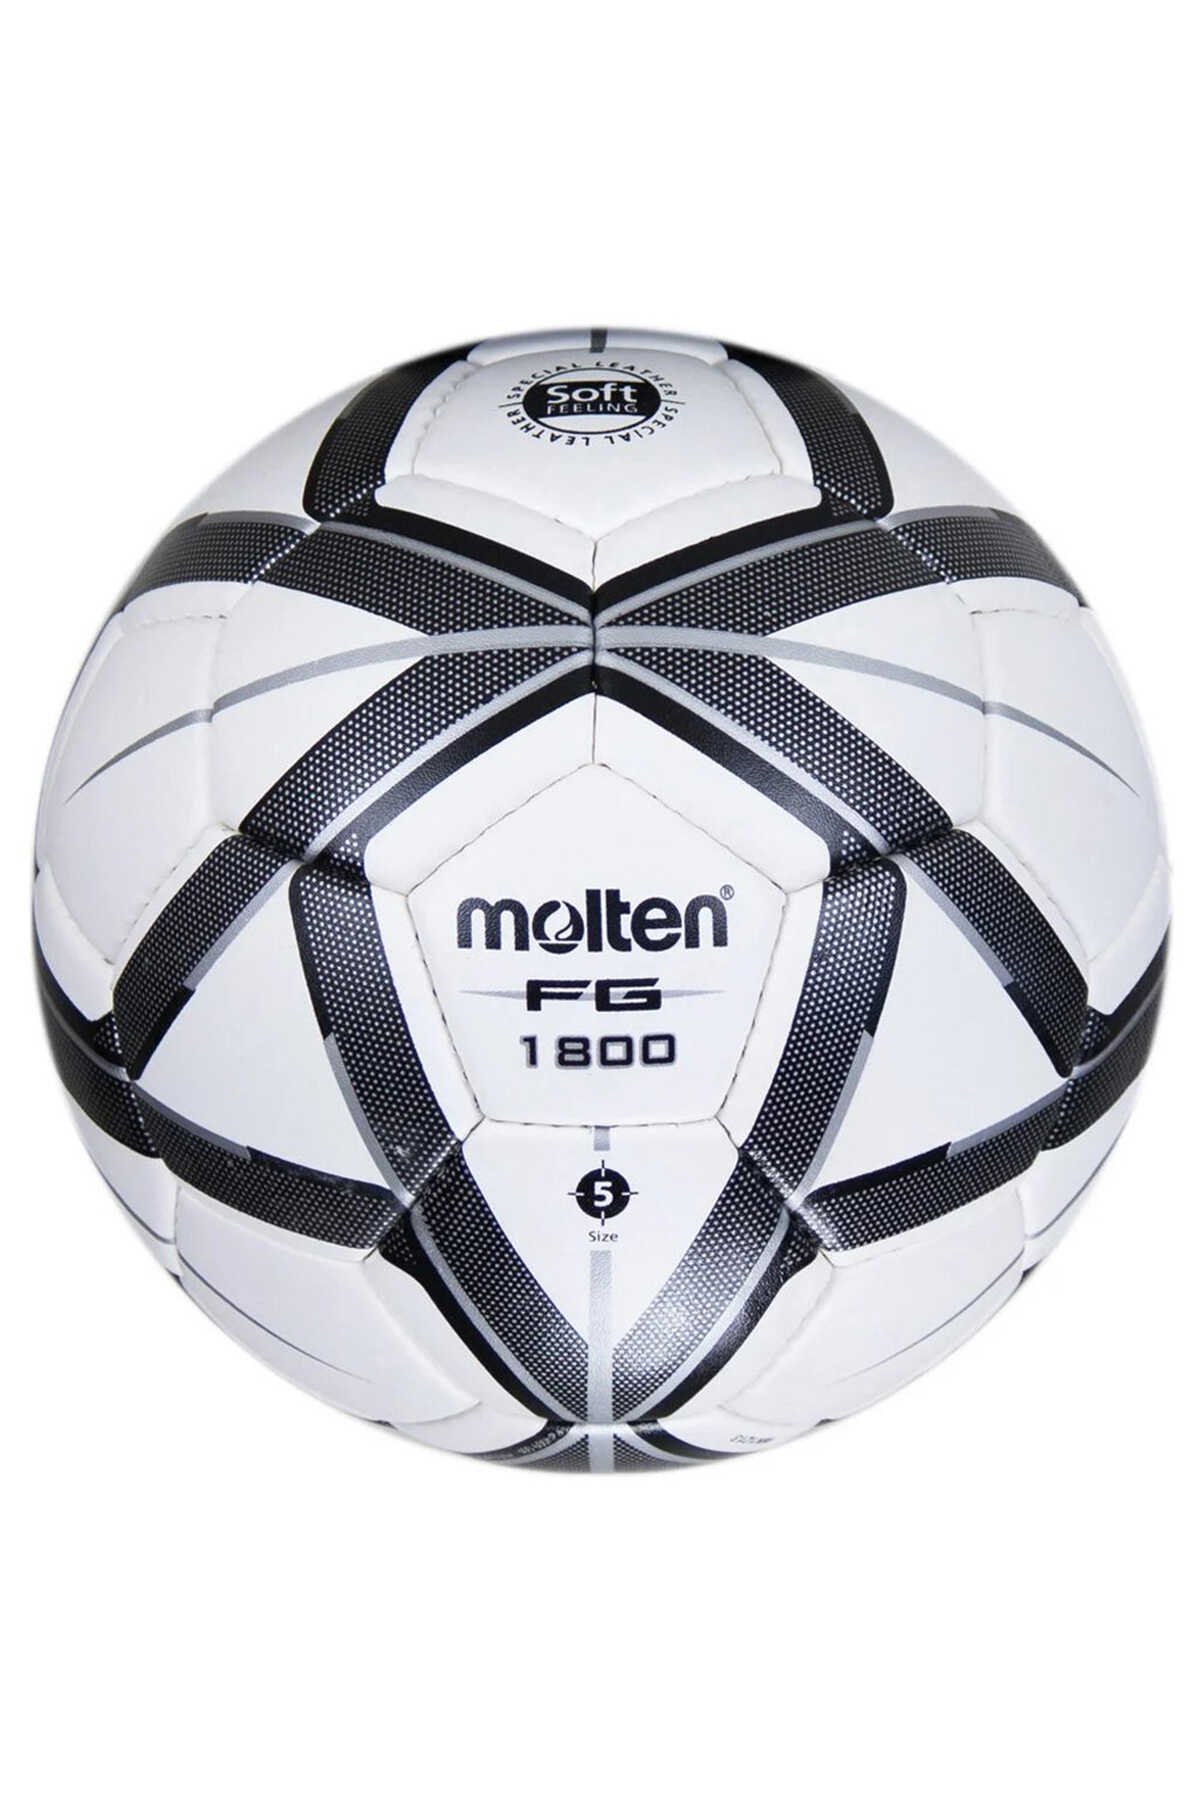 Molten - Molten 5 Numara Suni Deri Futbol Topu Siyah / Beyaz